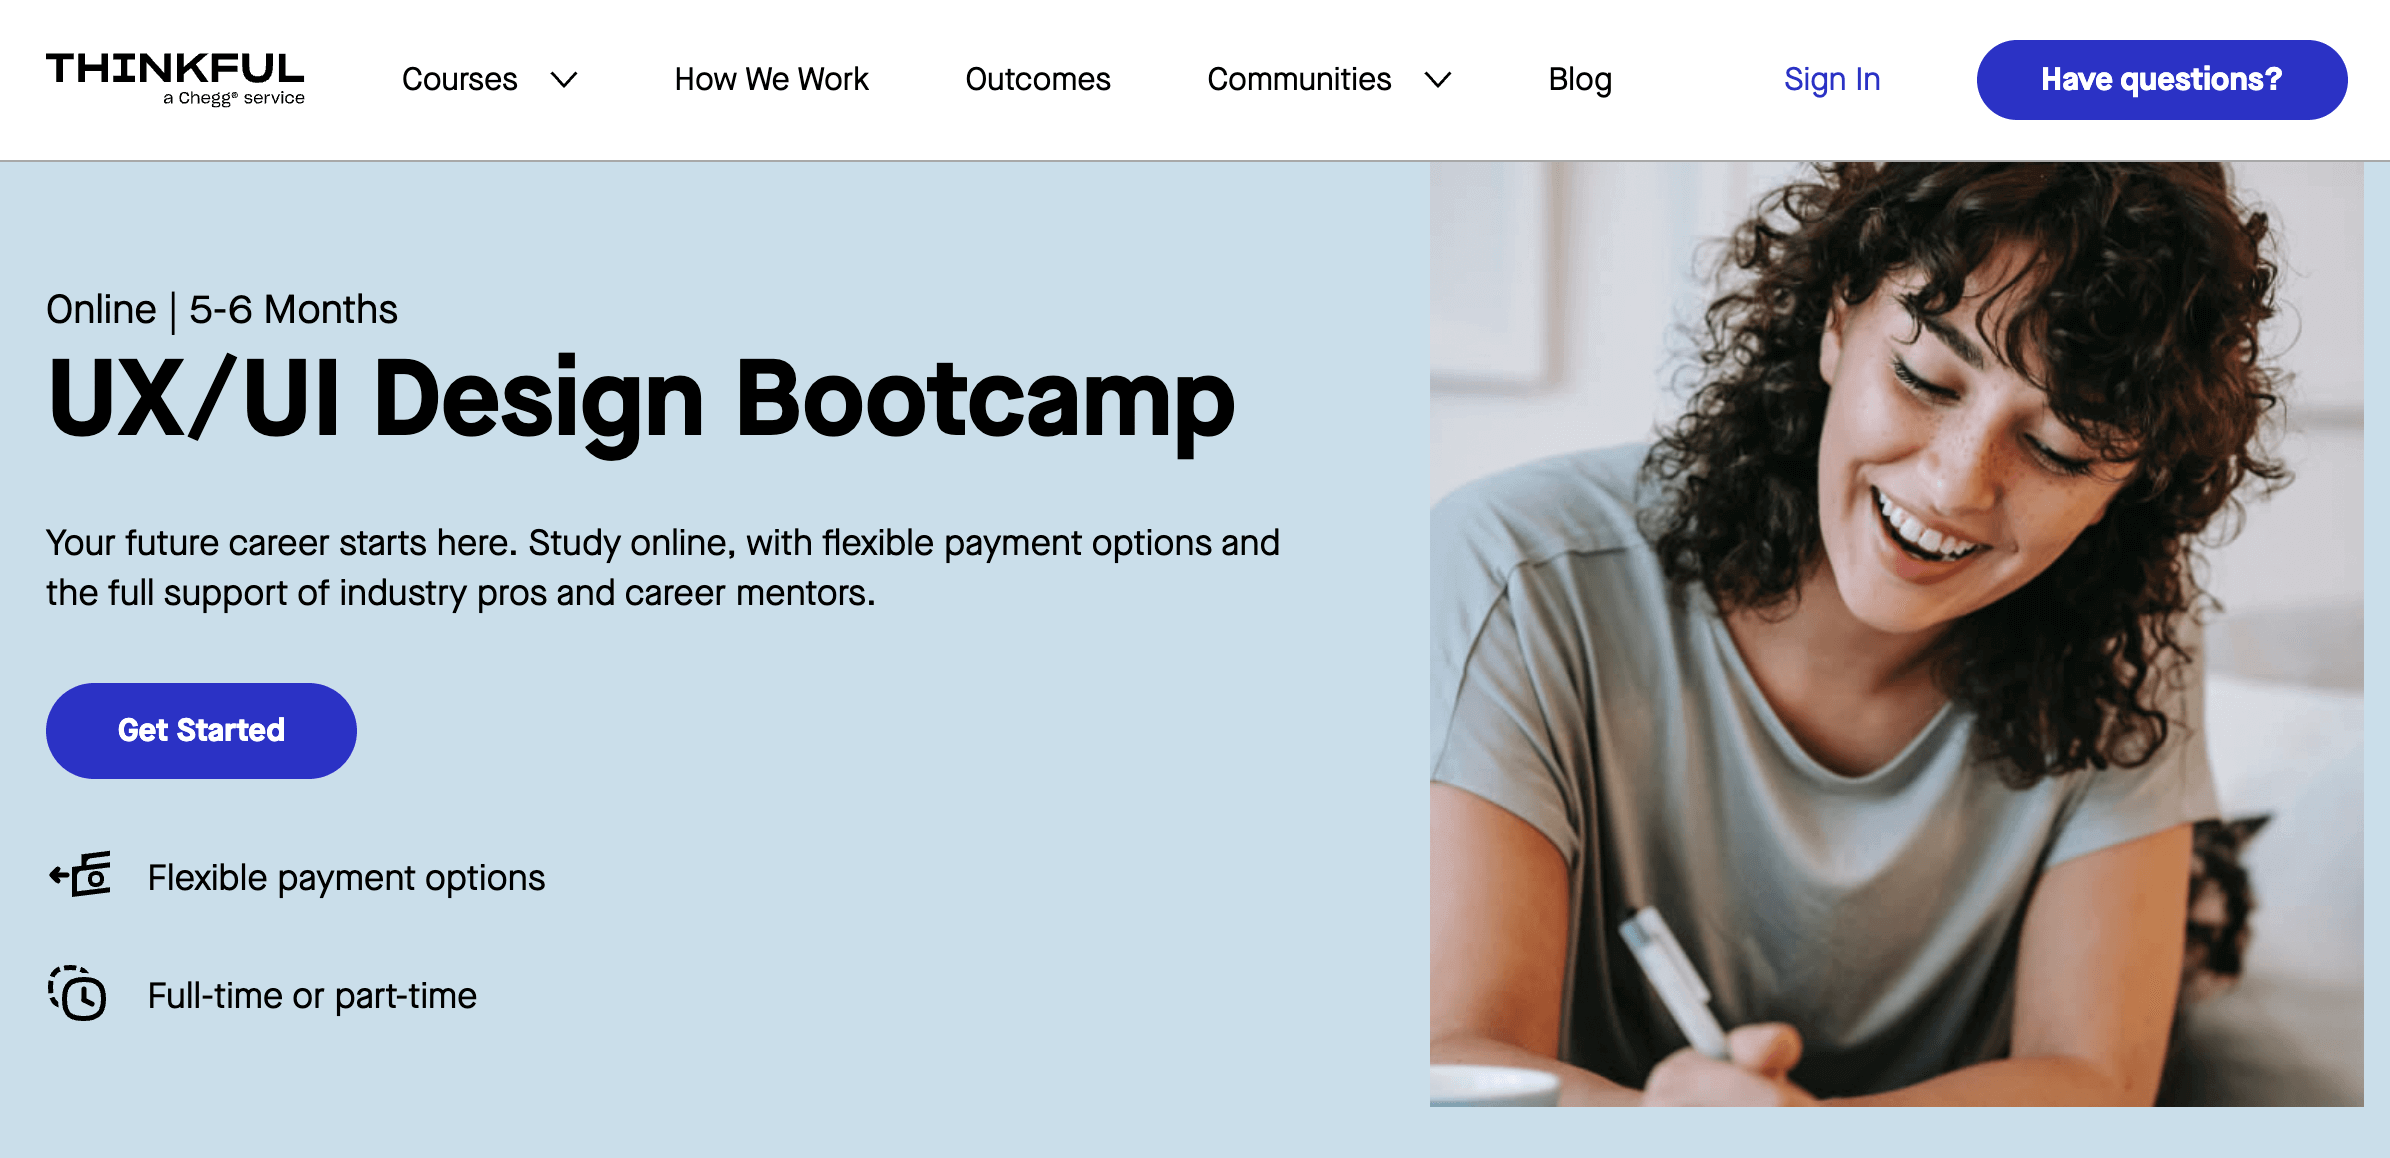 Thinkful UX/UI Design Bootcamp